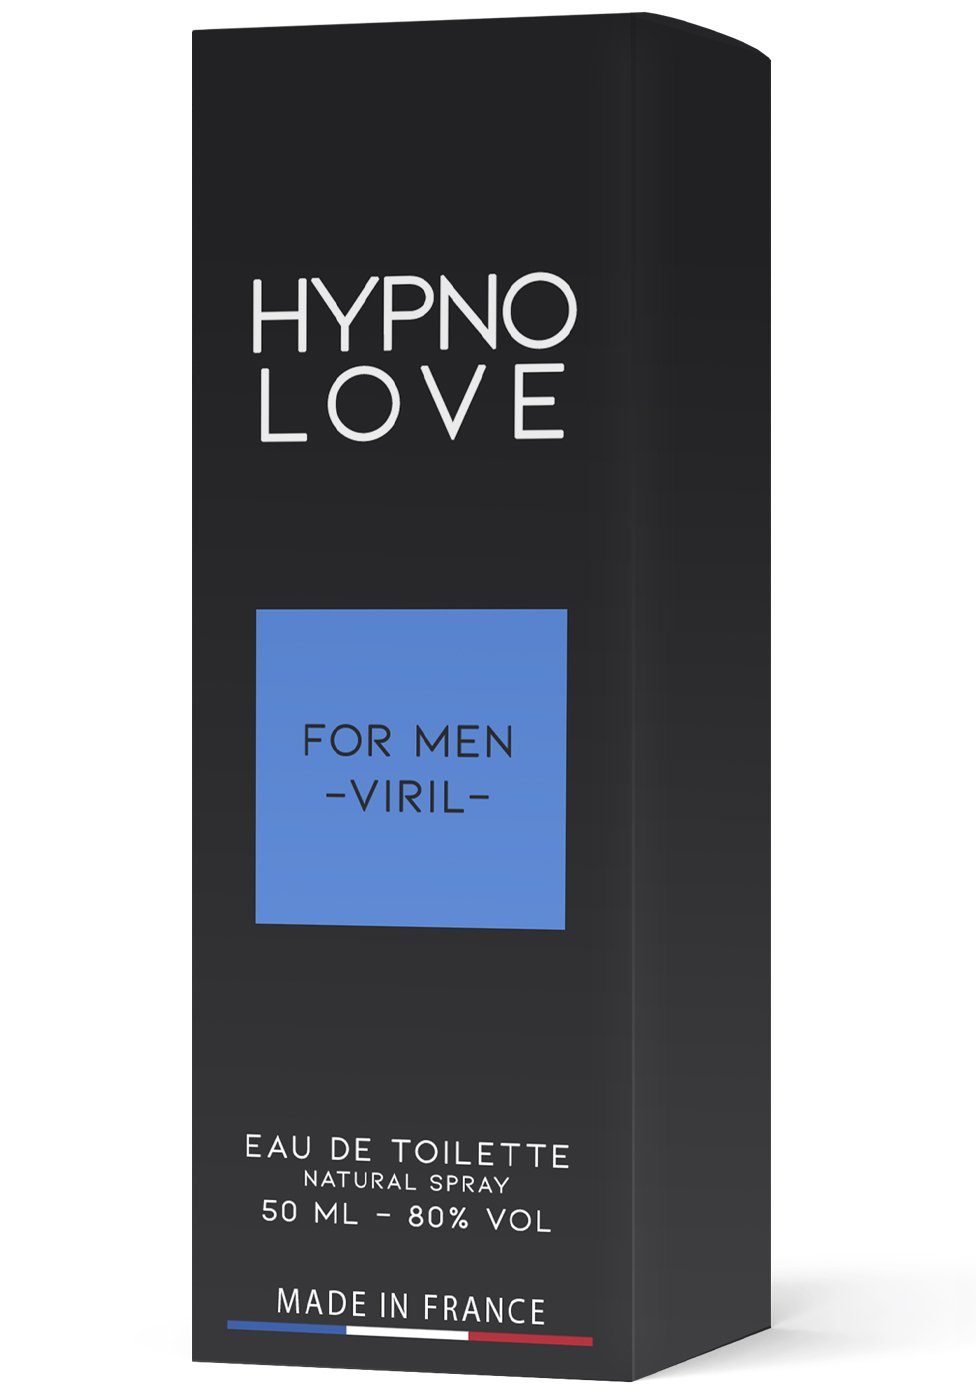 Ruf Eau Parfum for Parfum Hypno-Love Men de